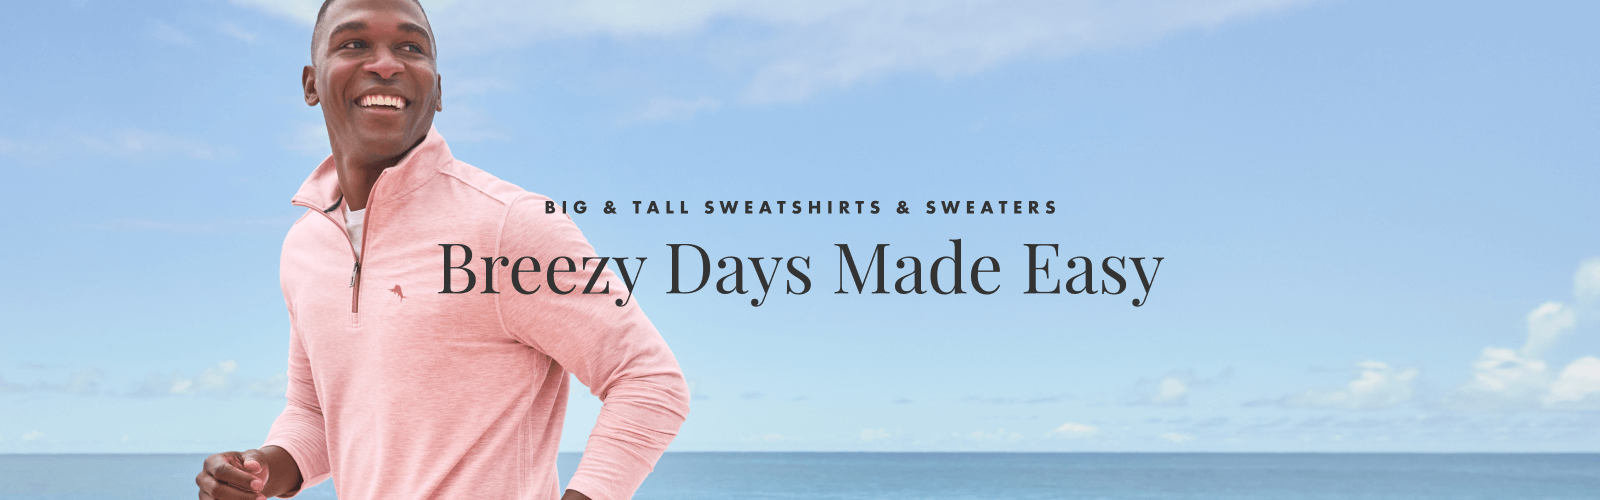 Big & Tall Sweatshirts & Sweaters: Breezy Days Made Easy